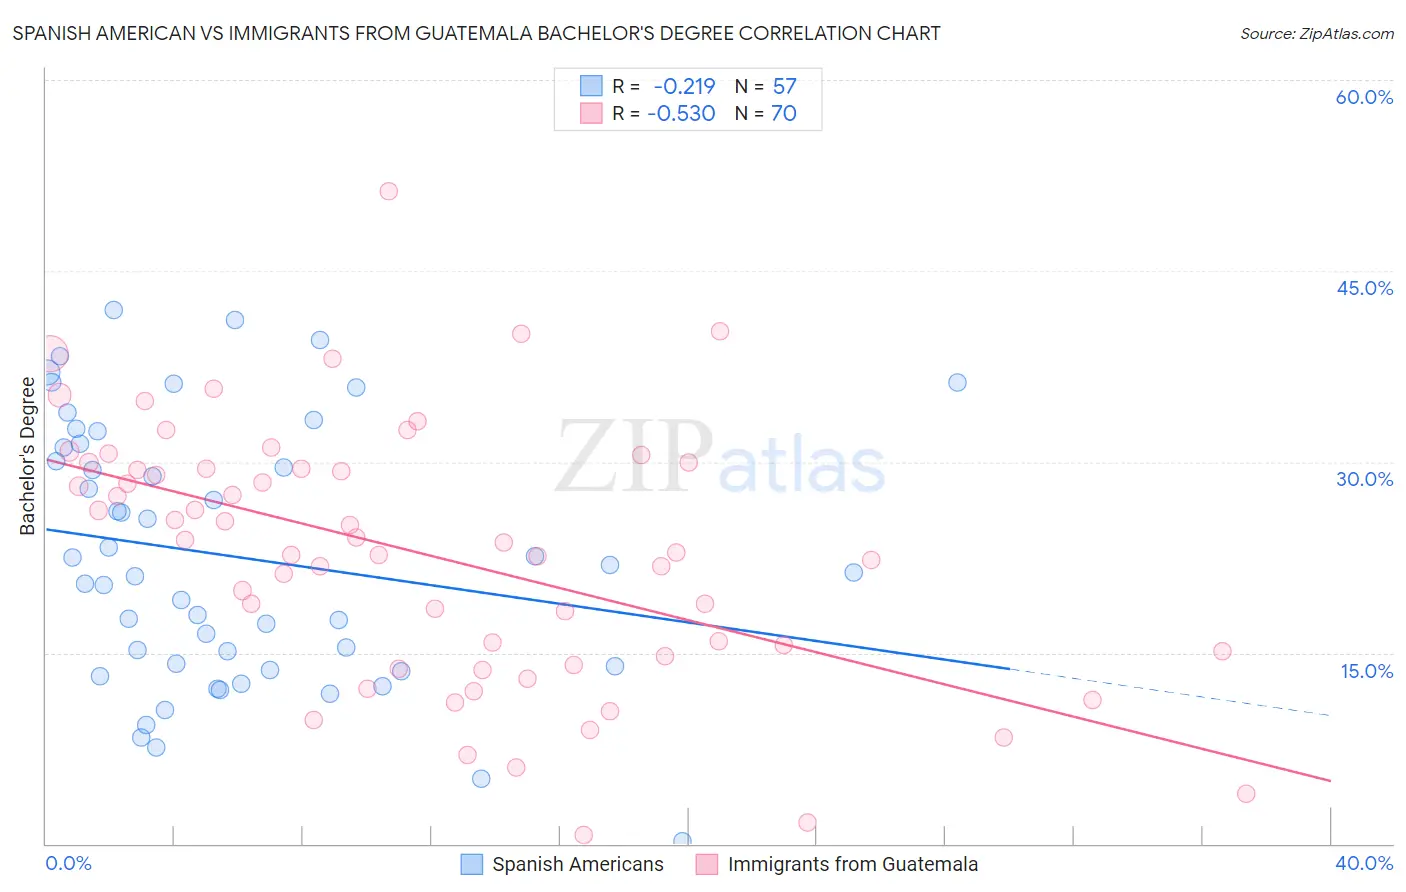 Spanish American vs Immigrants from Guatemala Bachelor's Degree